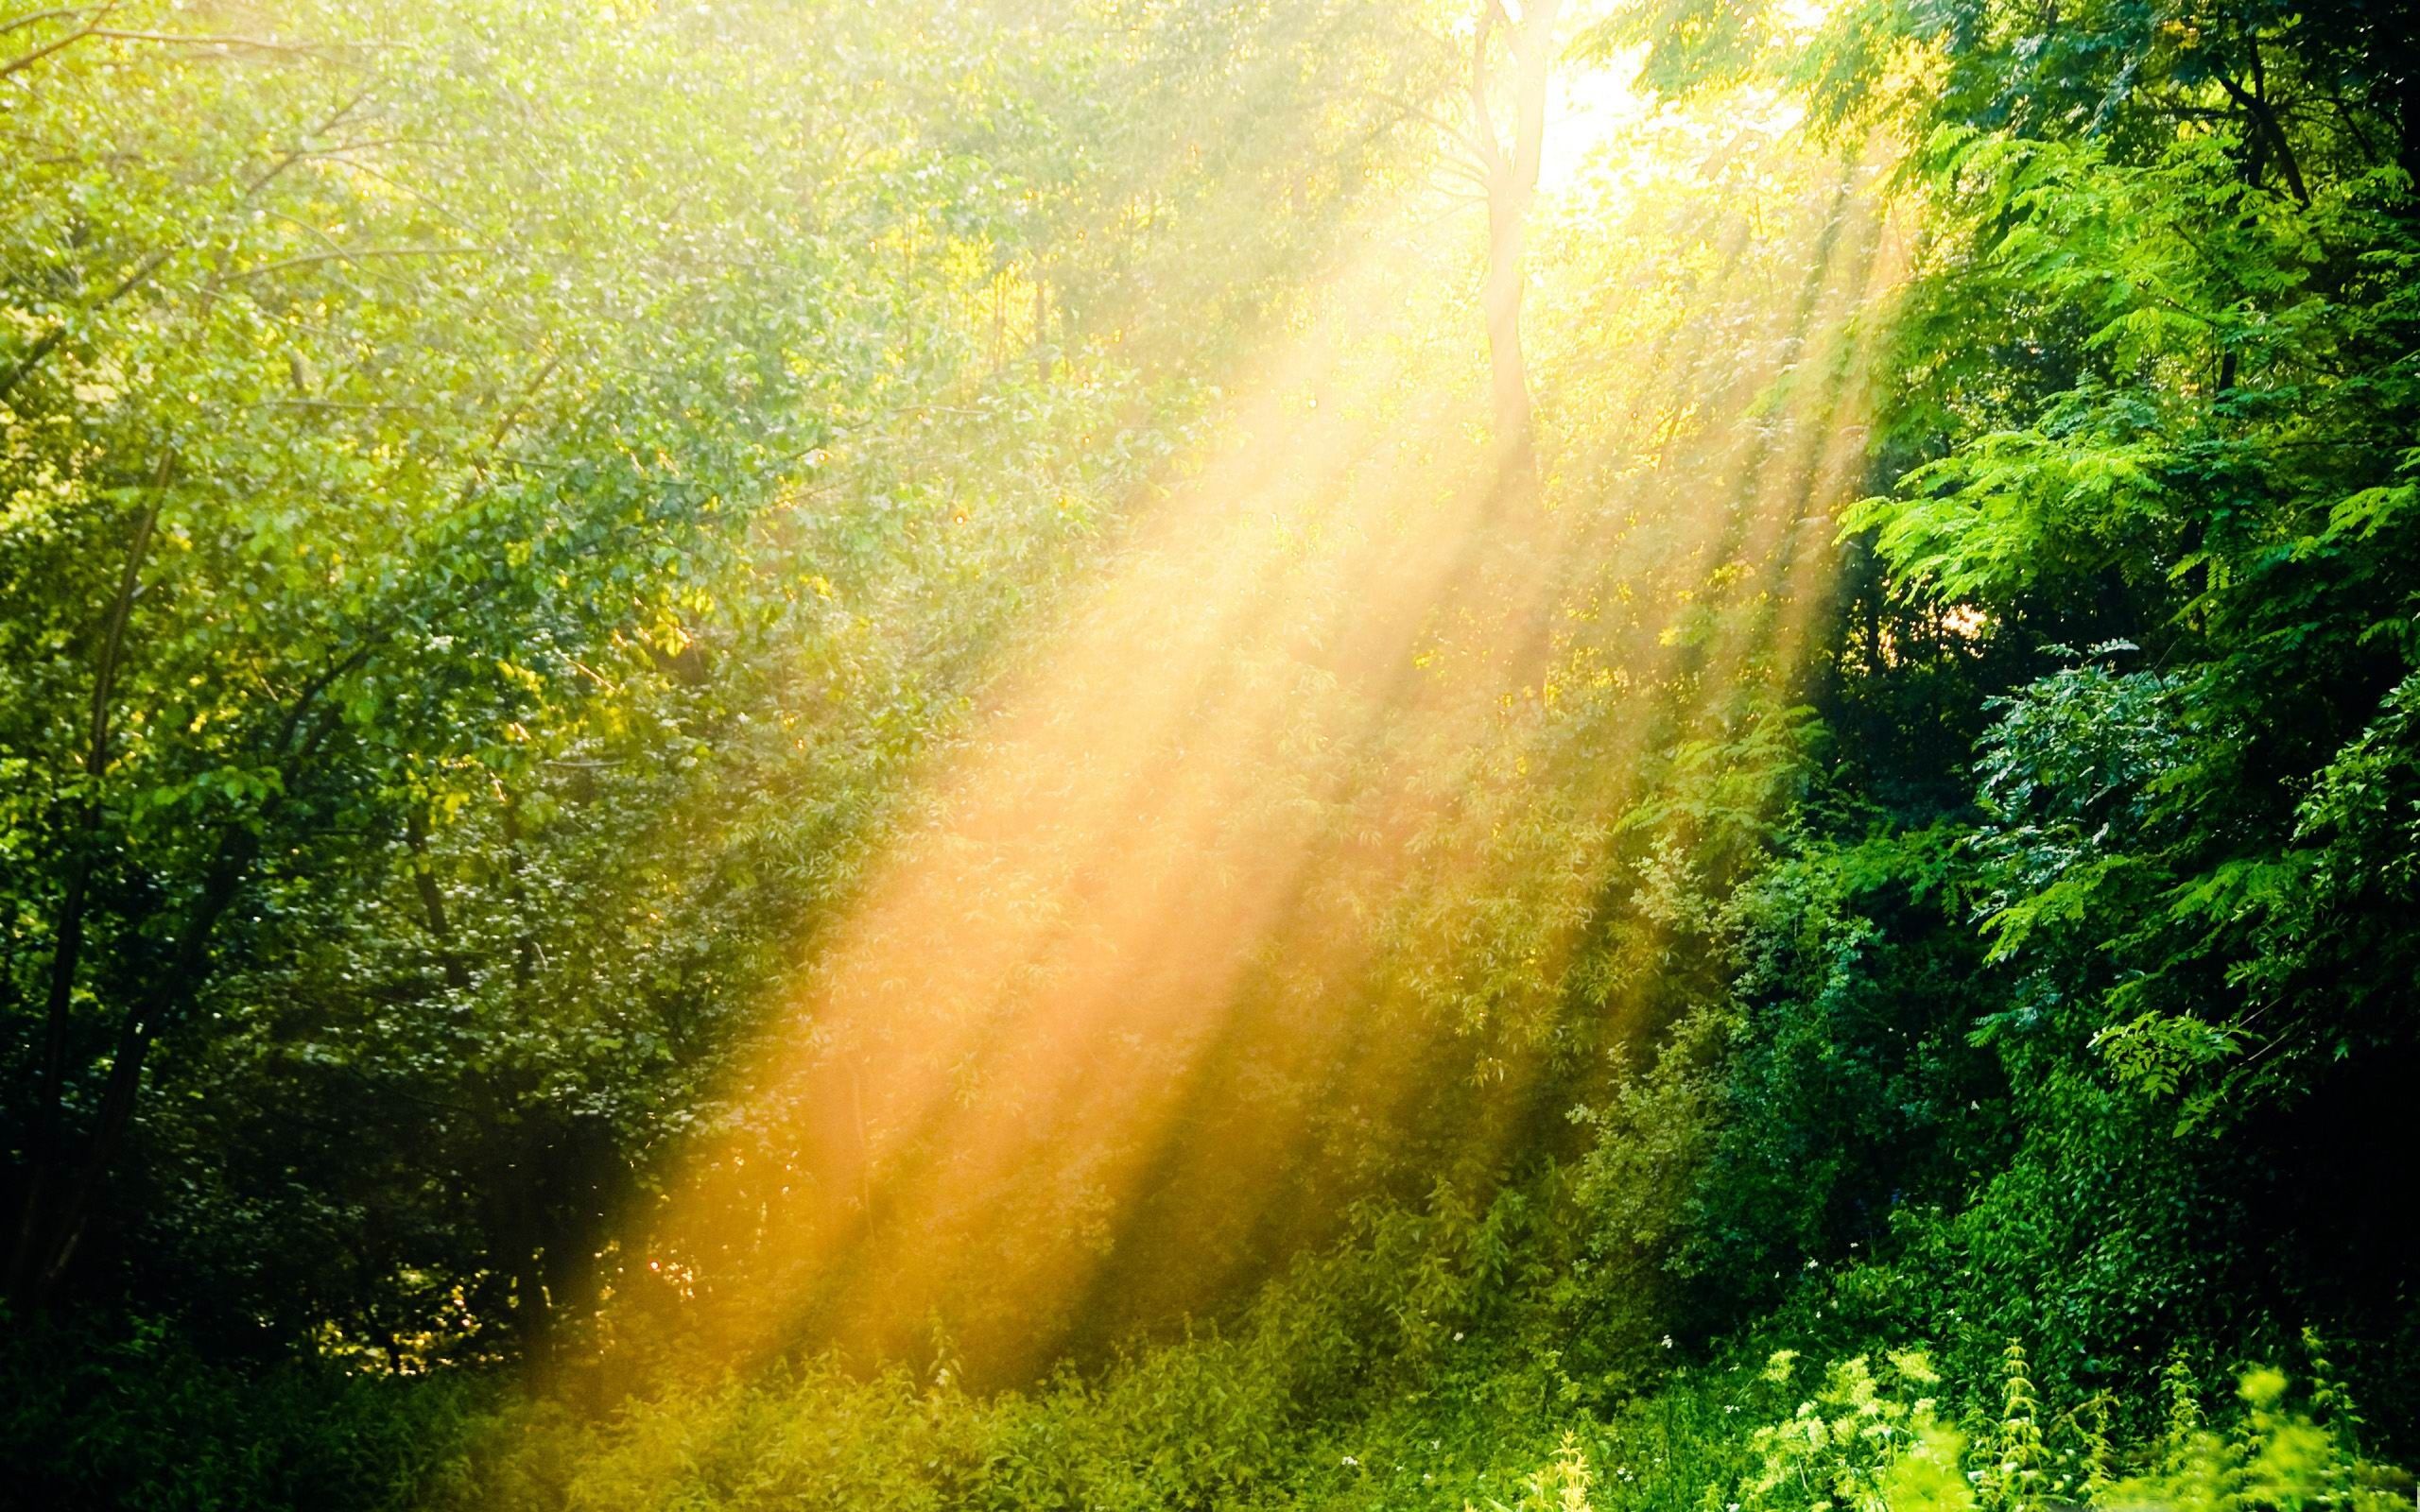 A sun shining through the trees in an open field - Sunshine